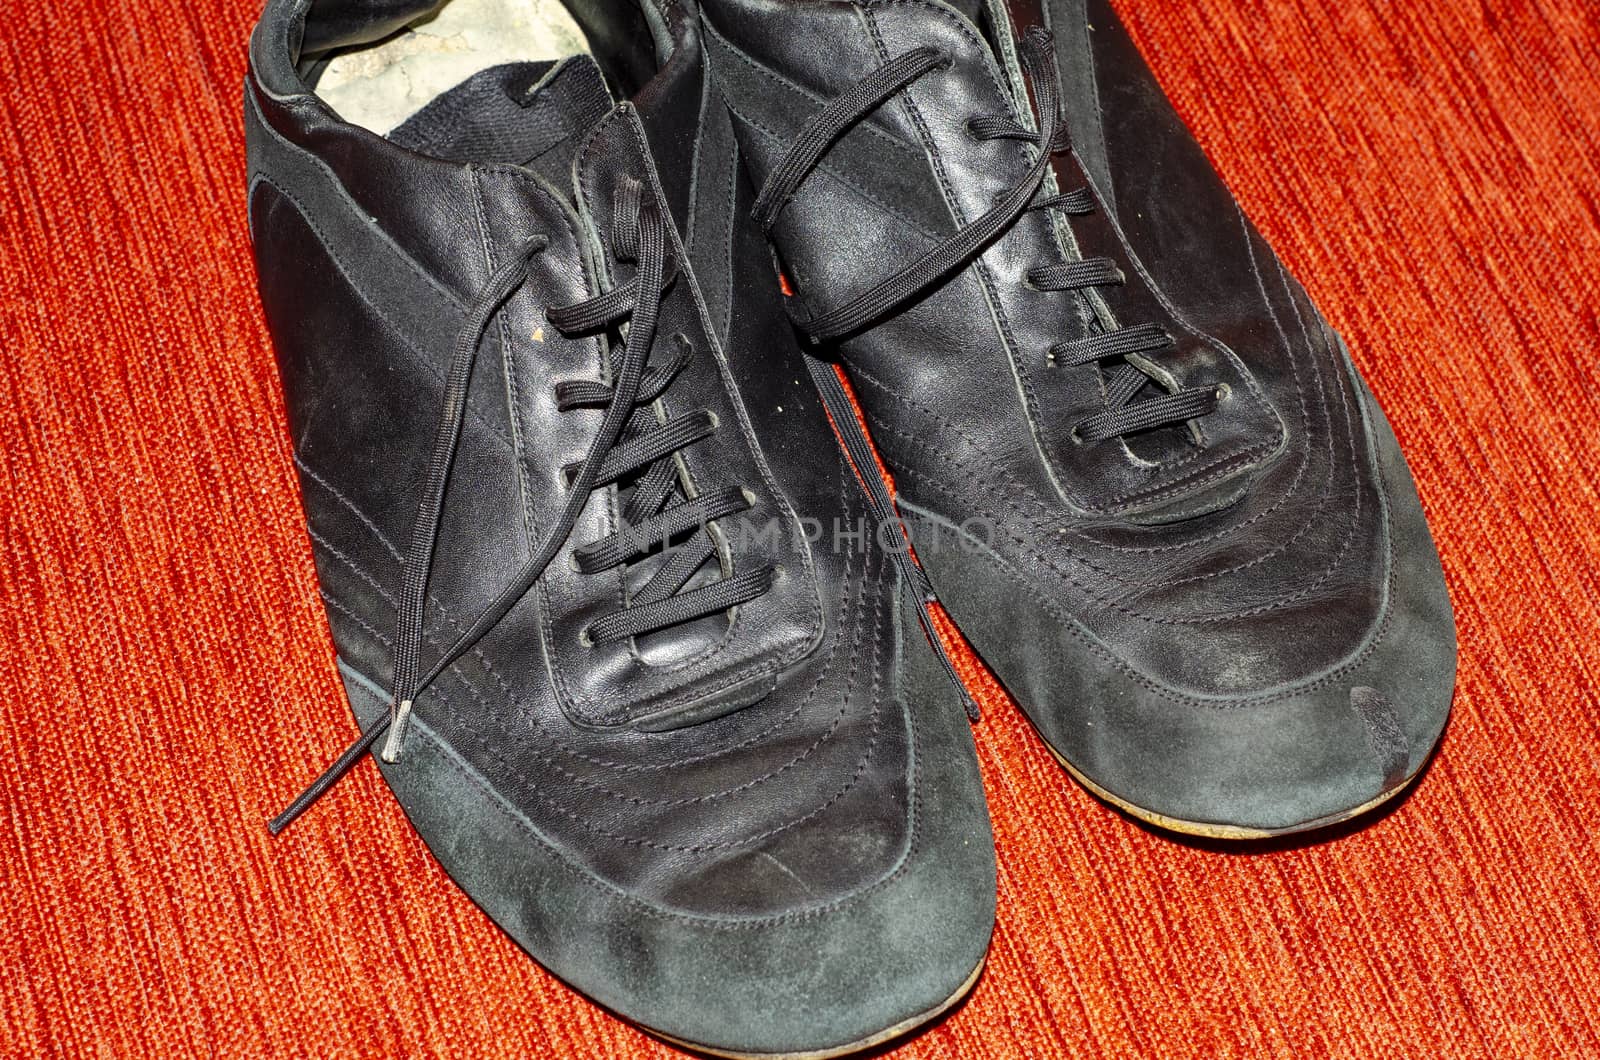 Old Black Walking Shoes, Vintage Black Walking Shoes by Hasilyus